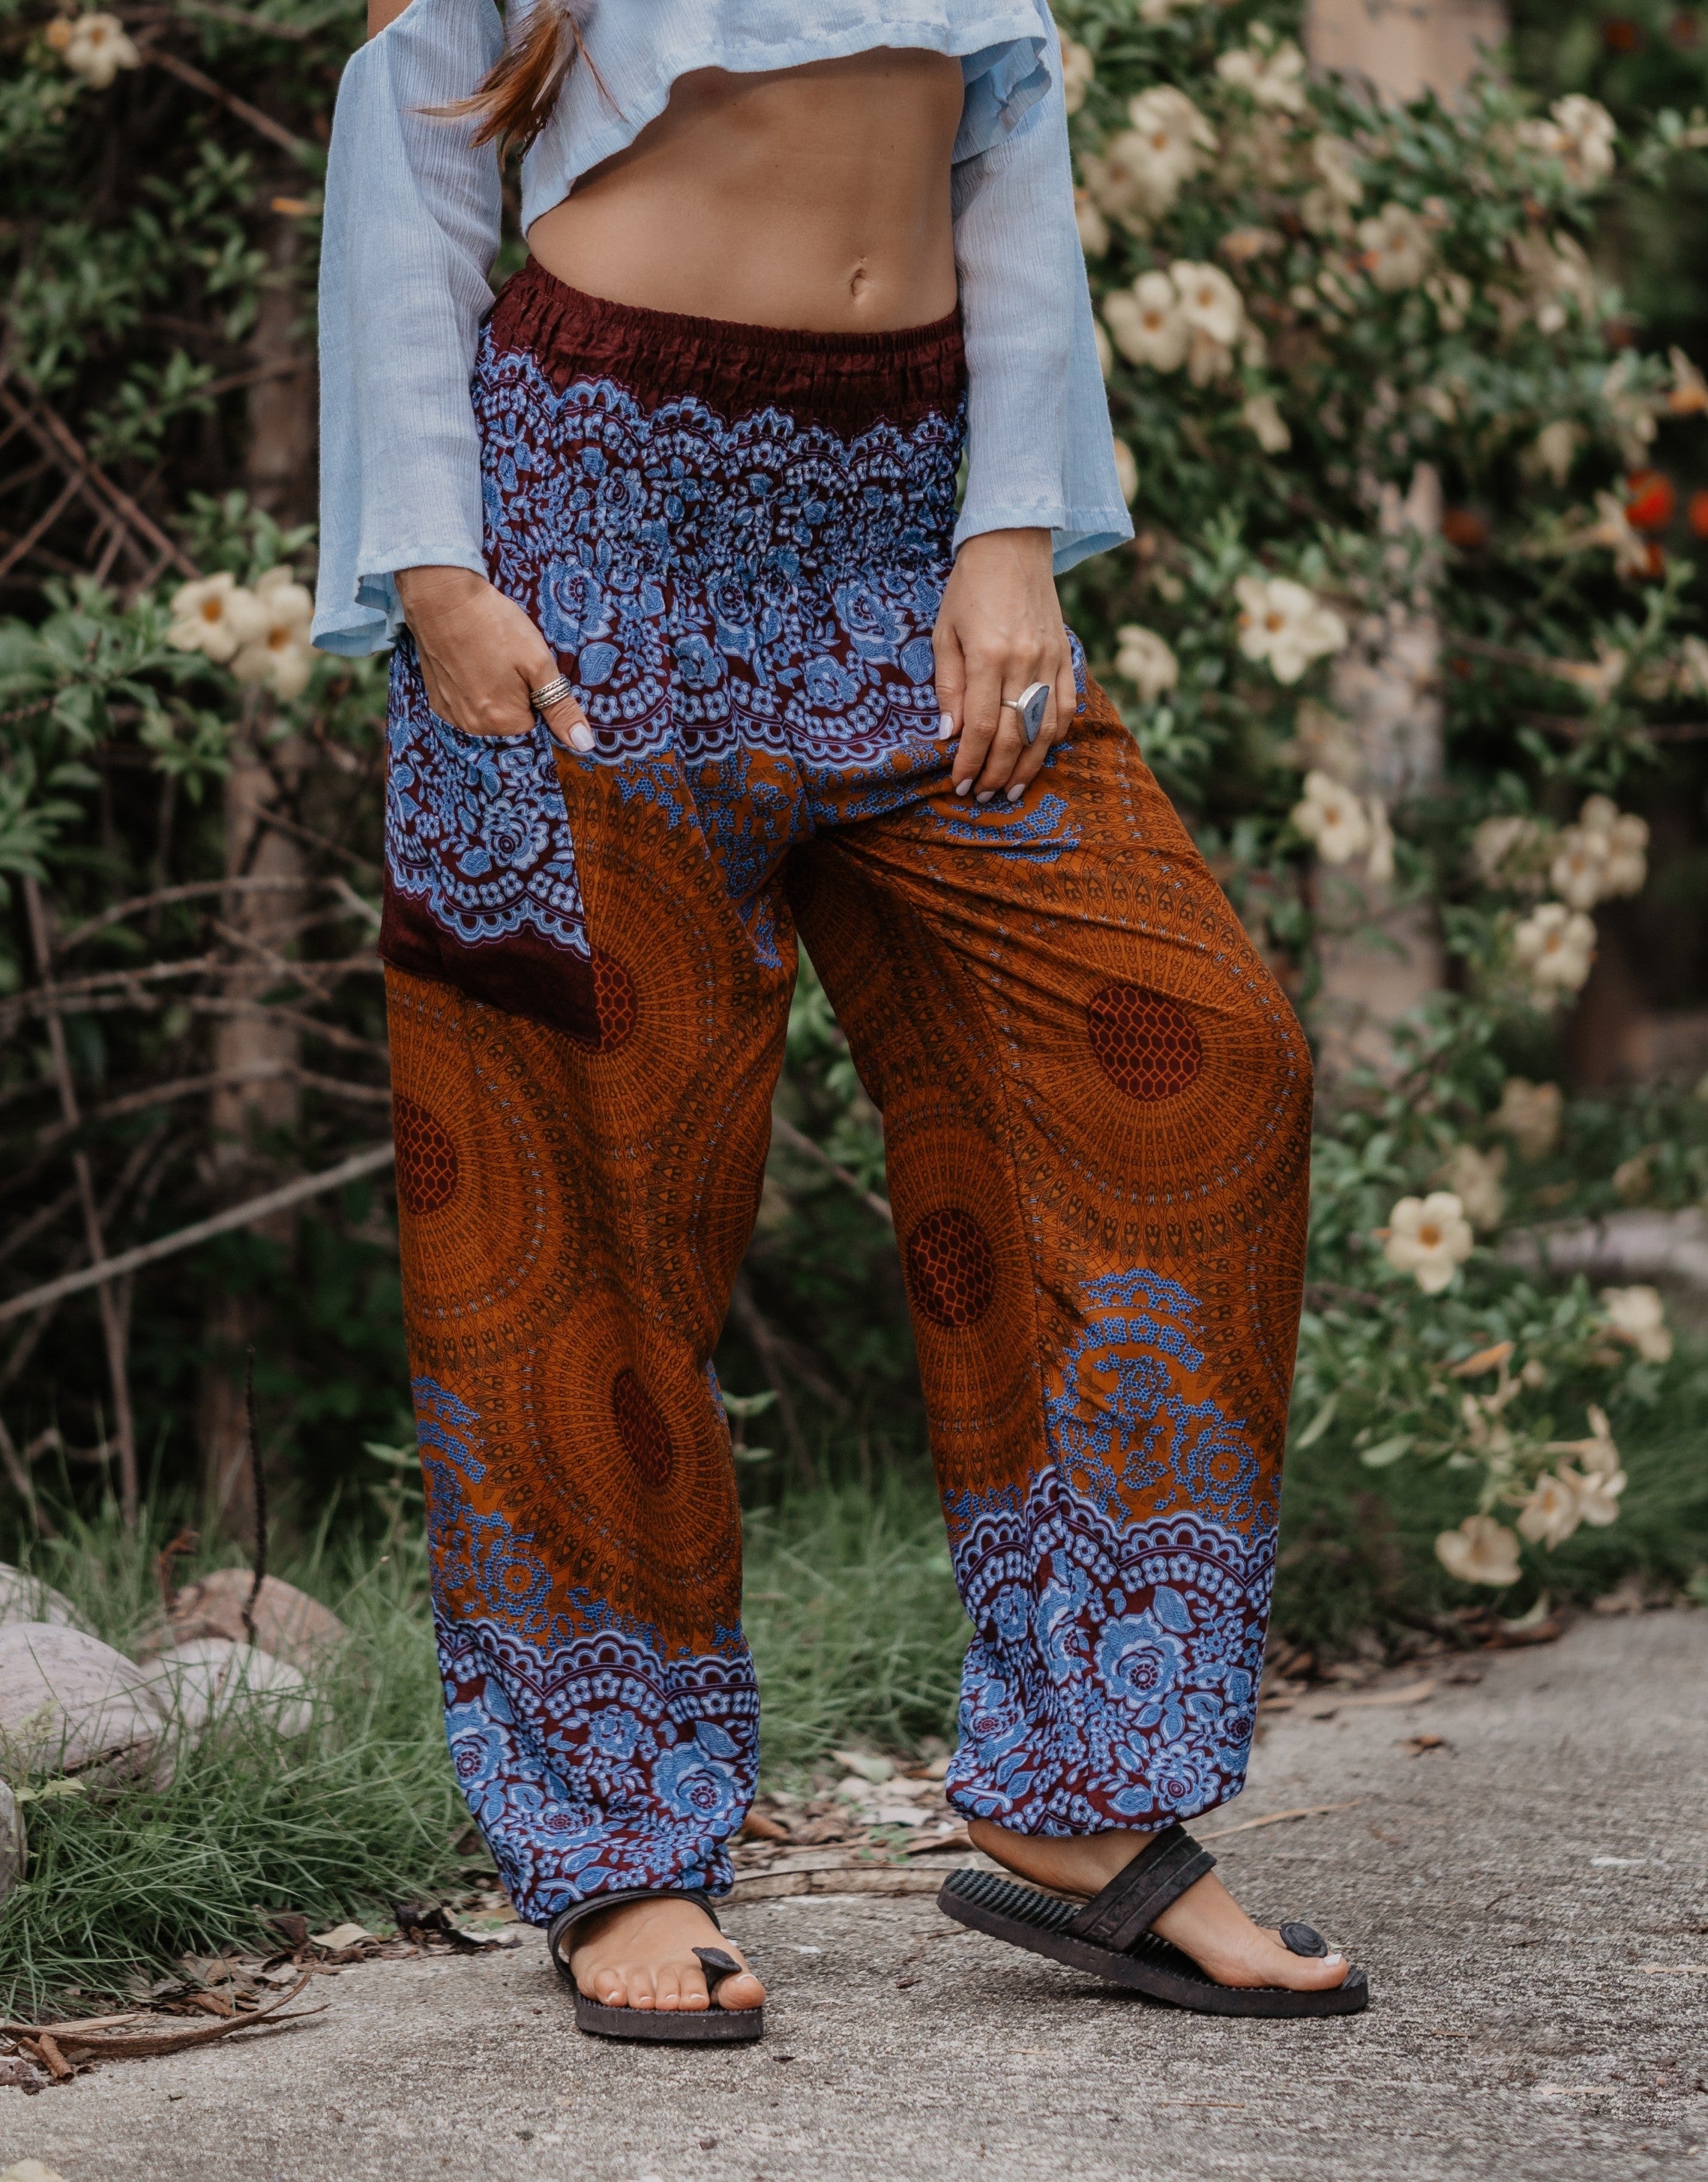 Harem Pants - Mandala Print with Pink Flower Pattern - Turquoise